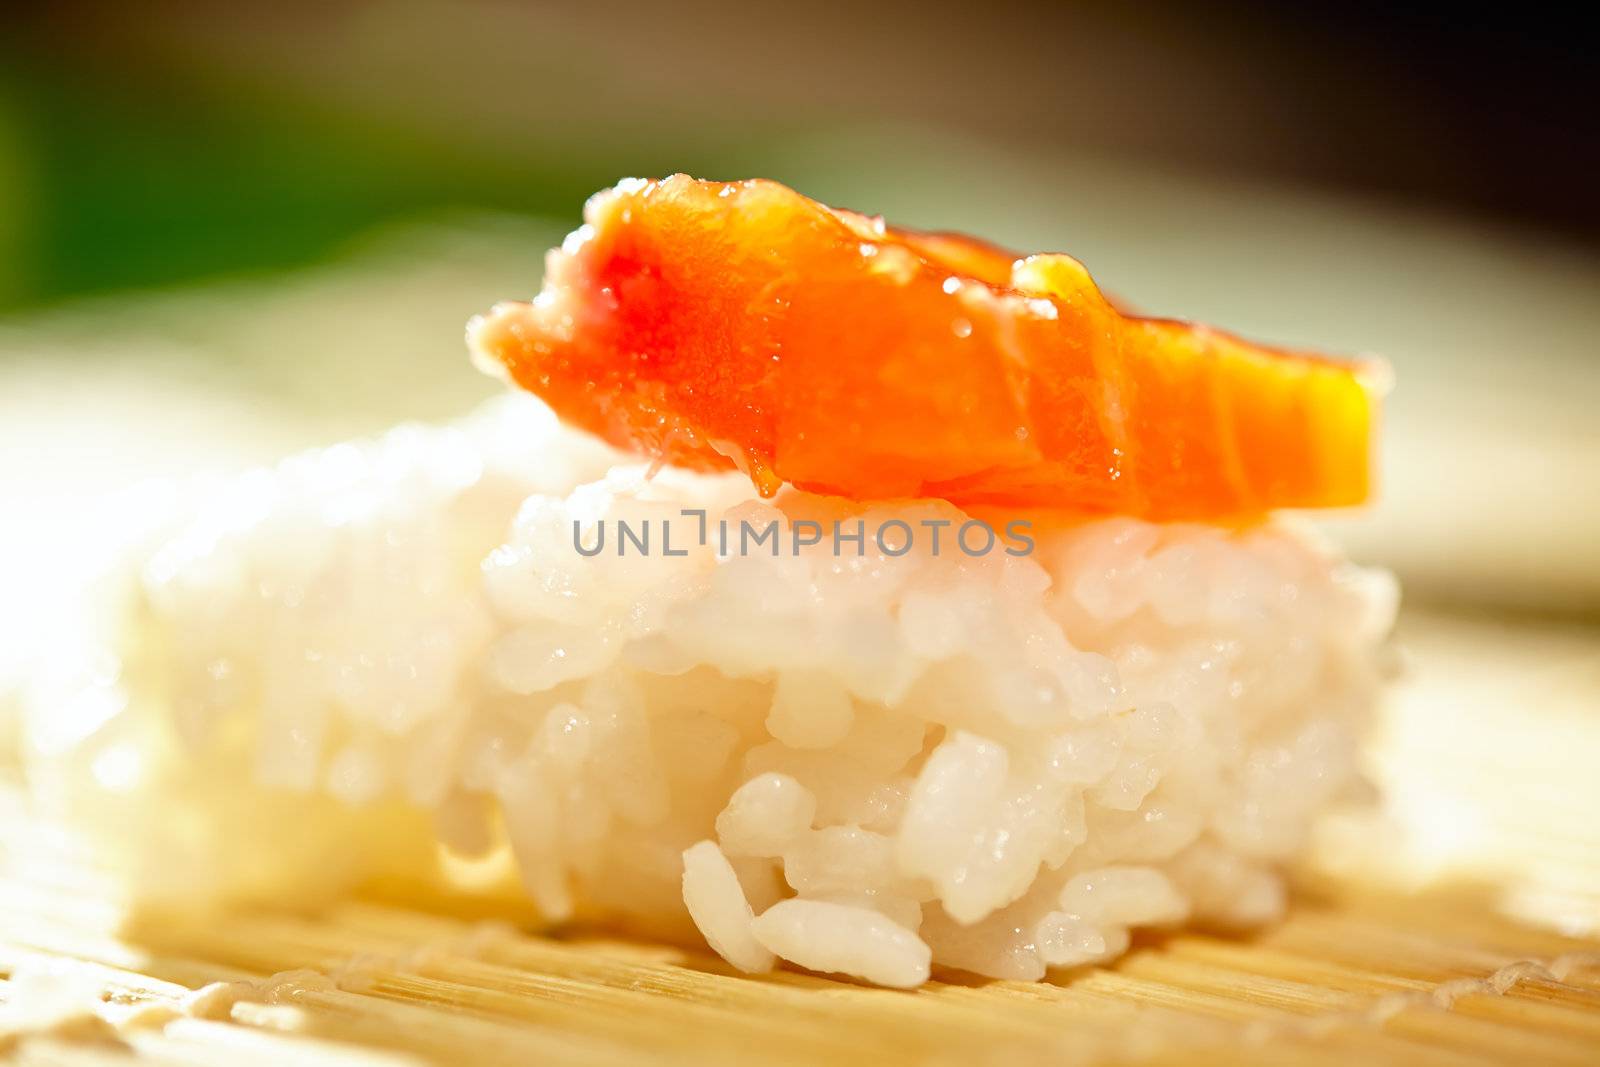 Rice with salmon. Macro shot with beautiful shallow dof illustrating making sushi process.